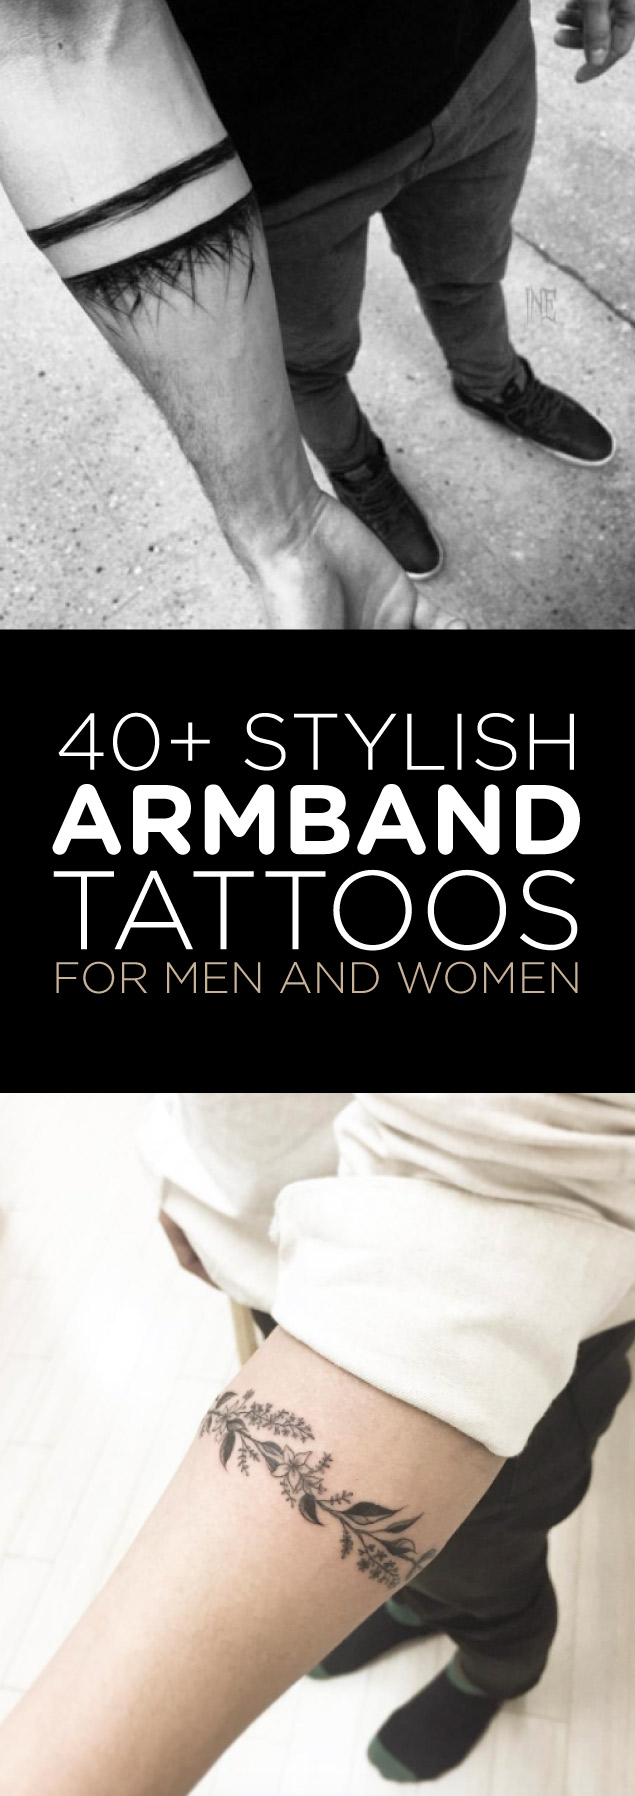 armband-tattoo-designs